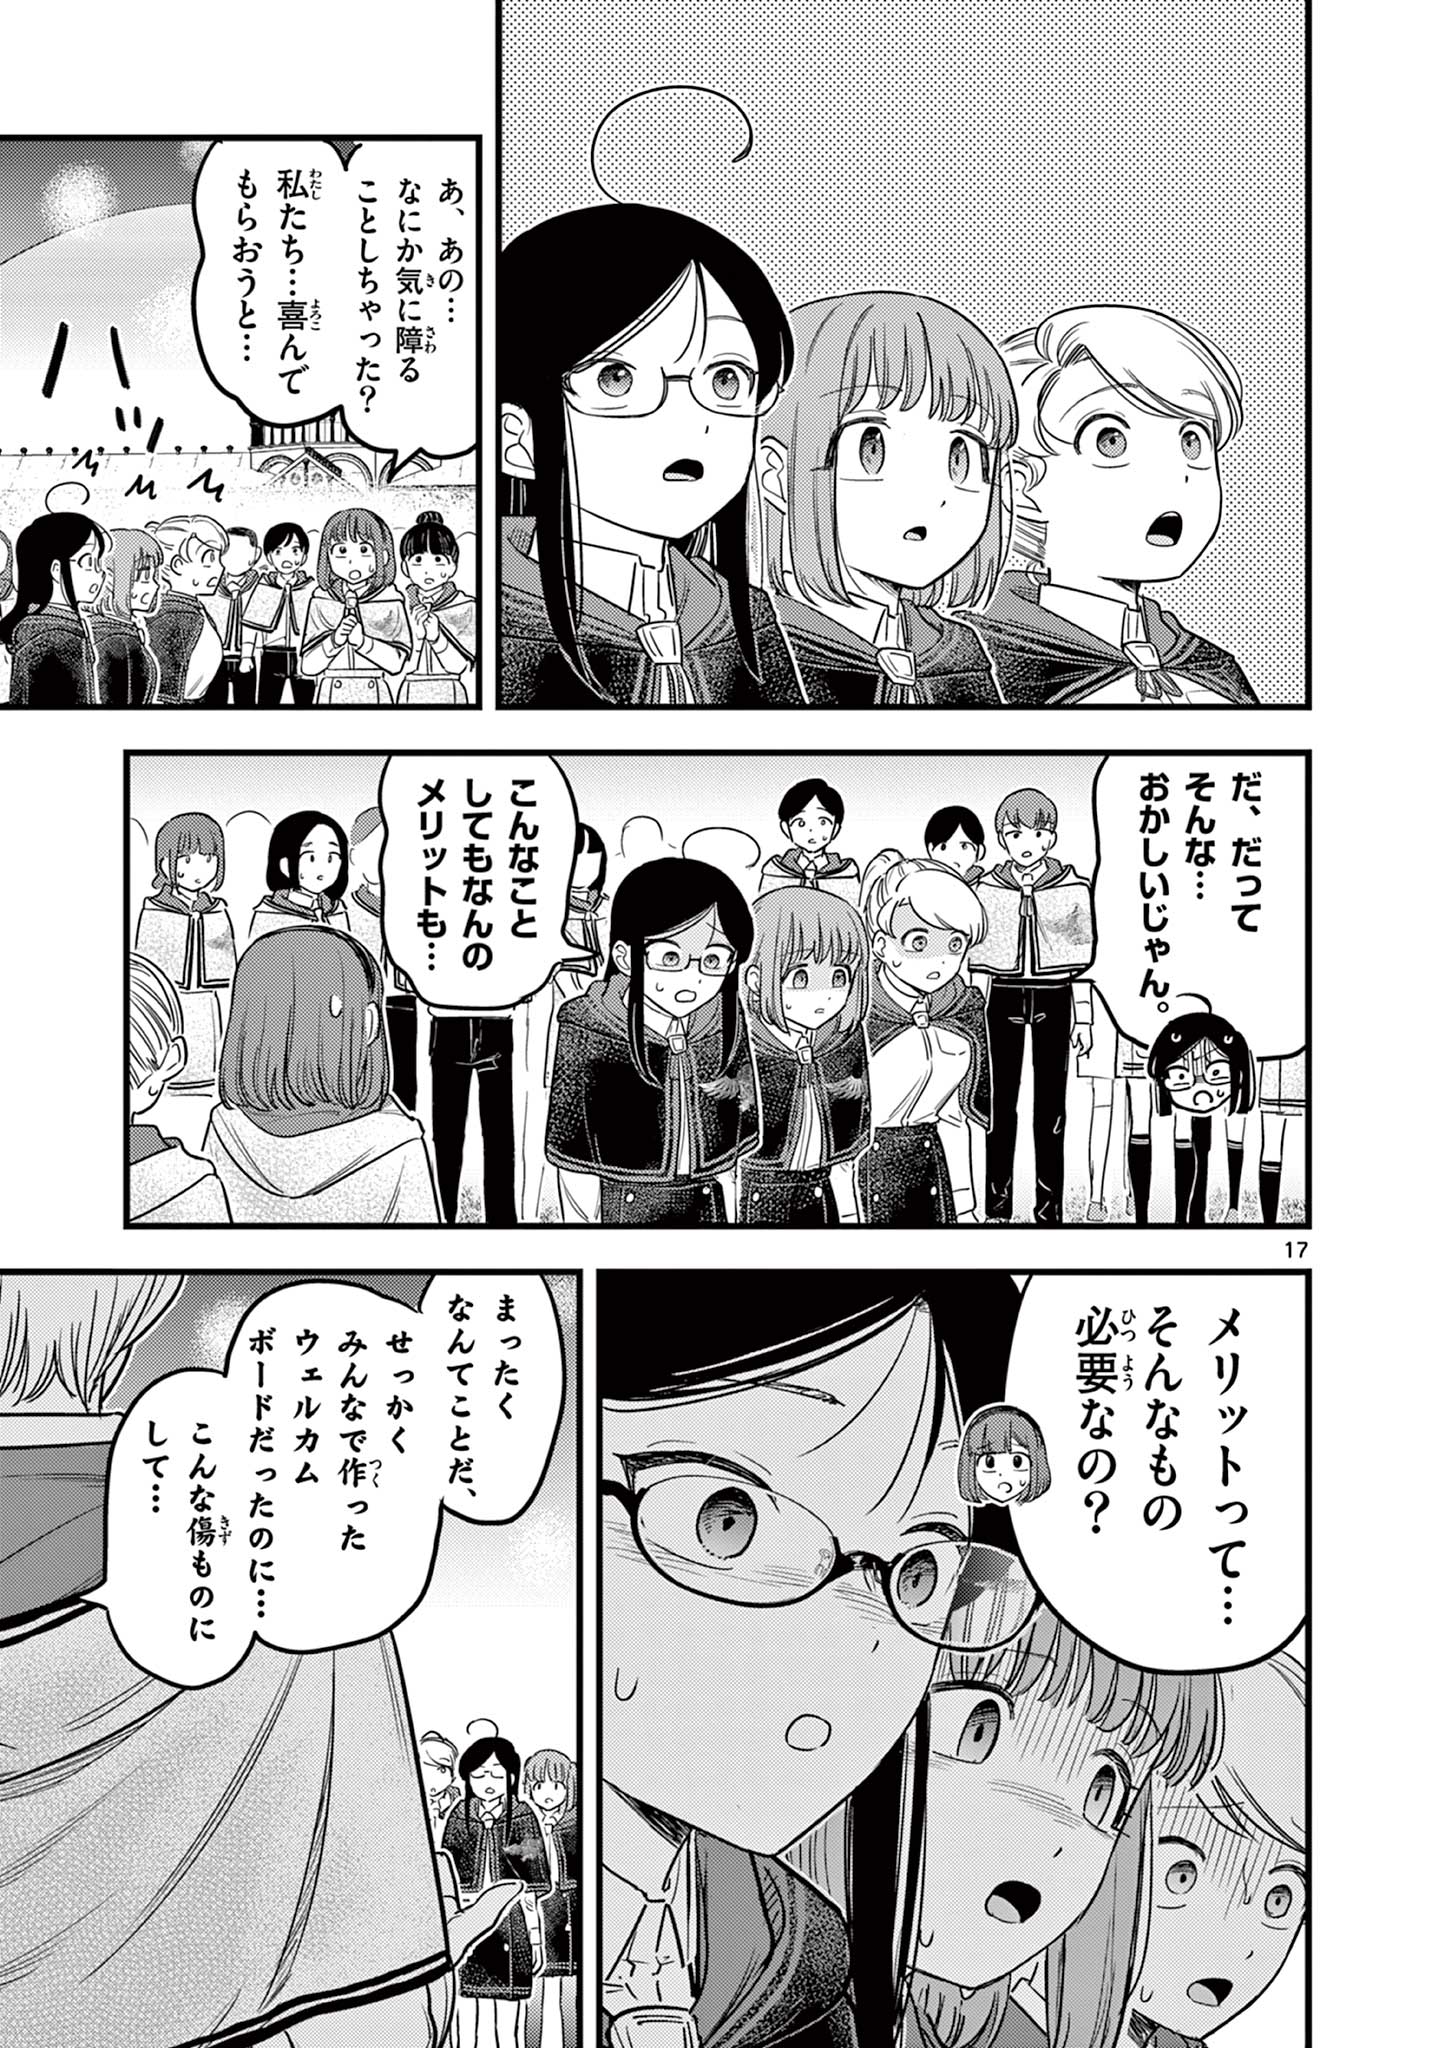 Kuro Mahou Ryou no Sanakunin - Chapter 11 - Page 17